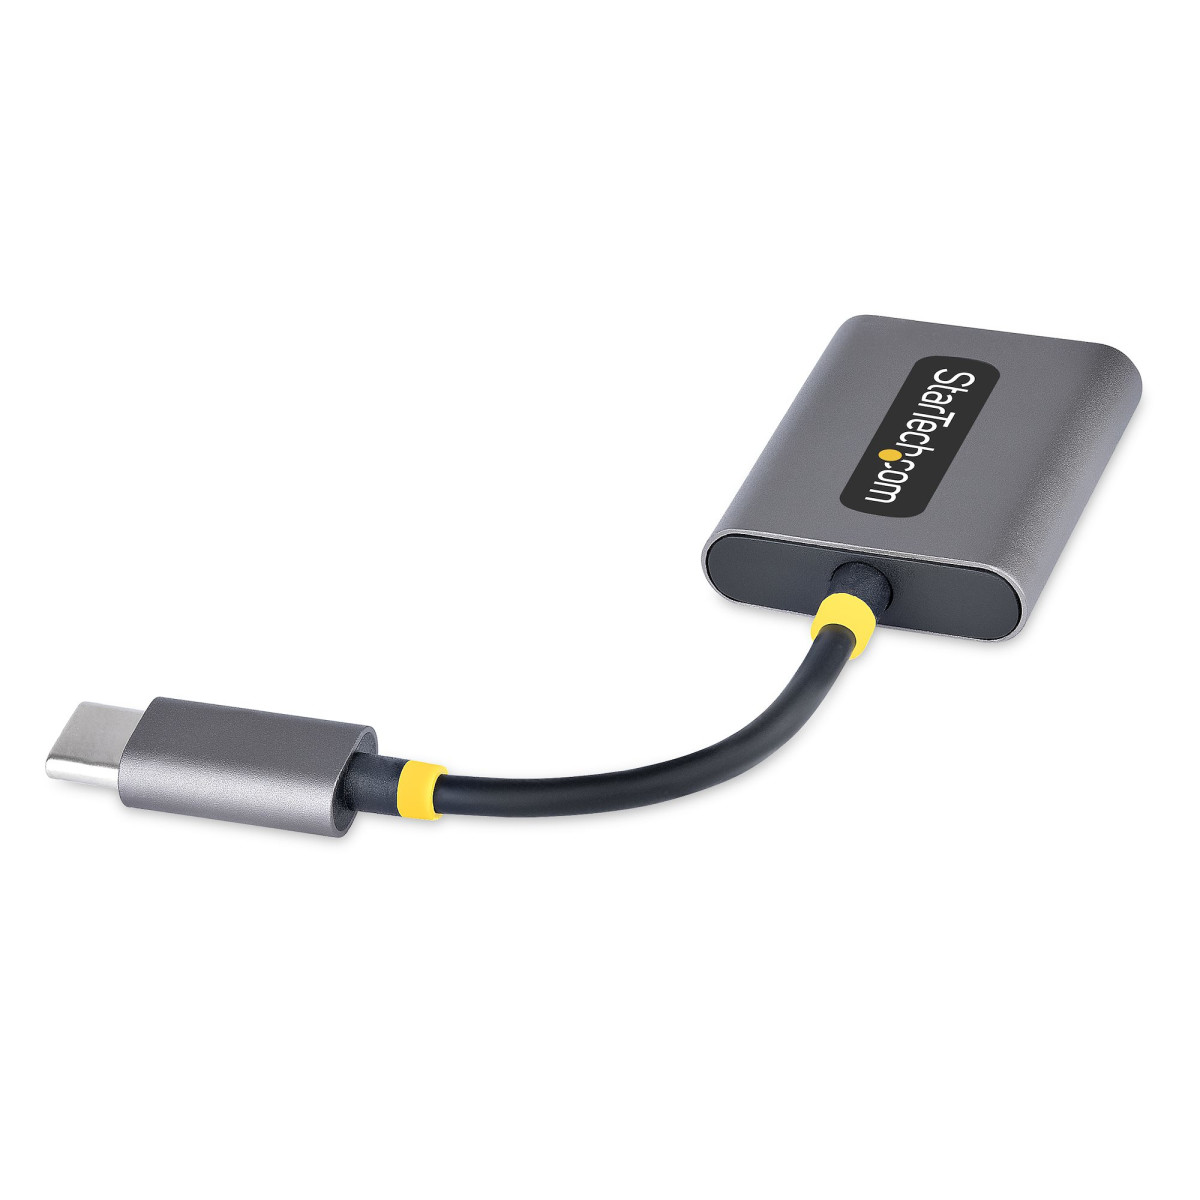 USB-C Headphone Splitter/Dongle with Mic